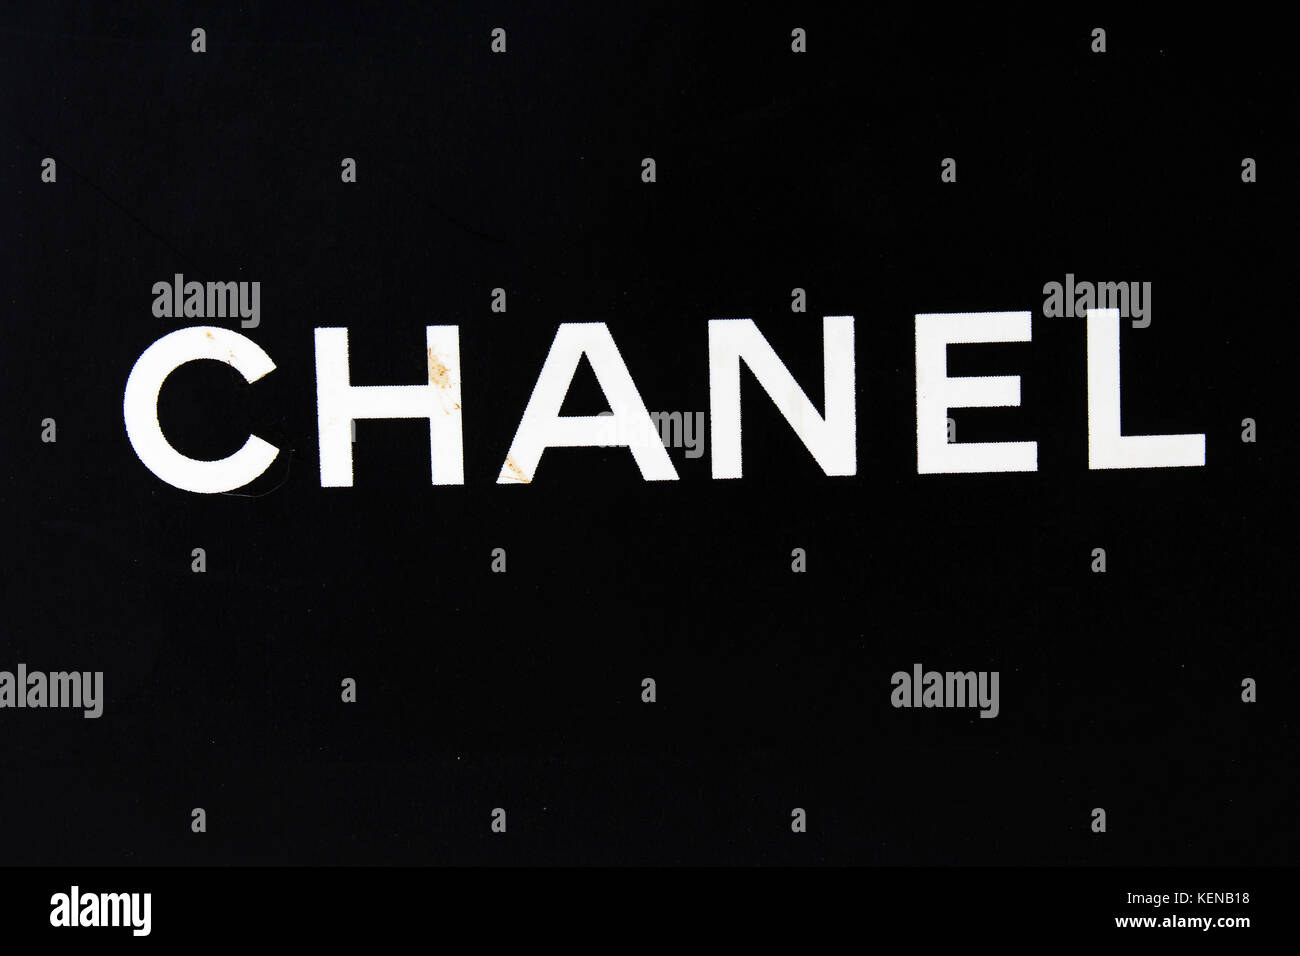 Chanel logo text word Stock Photo - Alamy